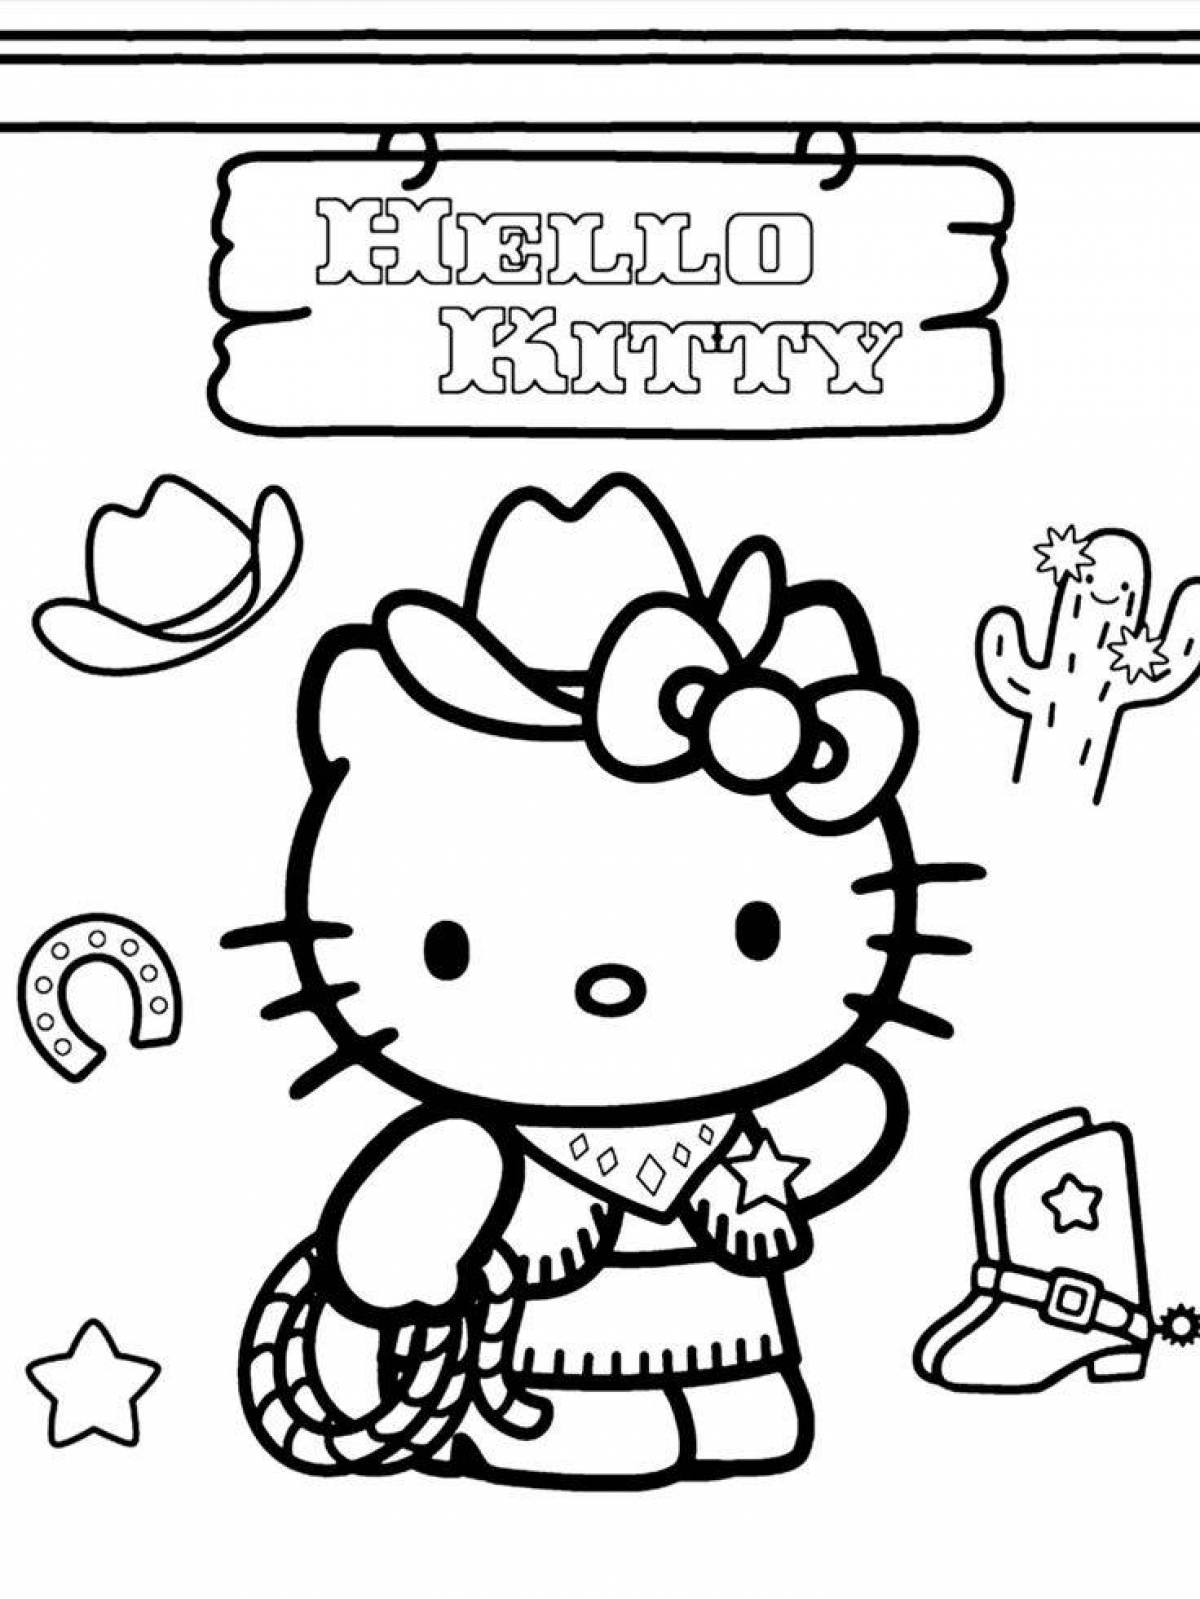 DIY Hello Kitty jelly как сделать желе Хелоу Китти самому своими руками развивающее занятие для дет